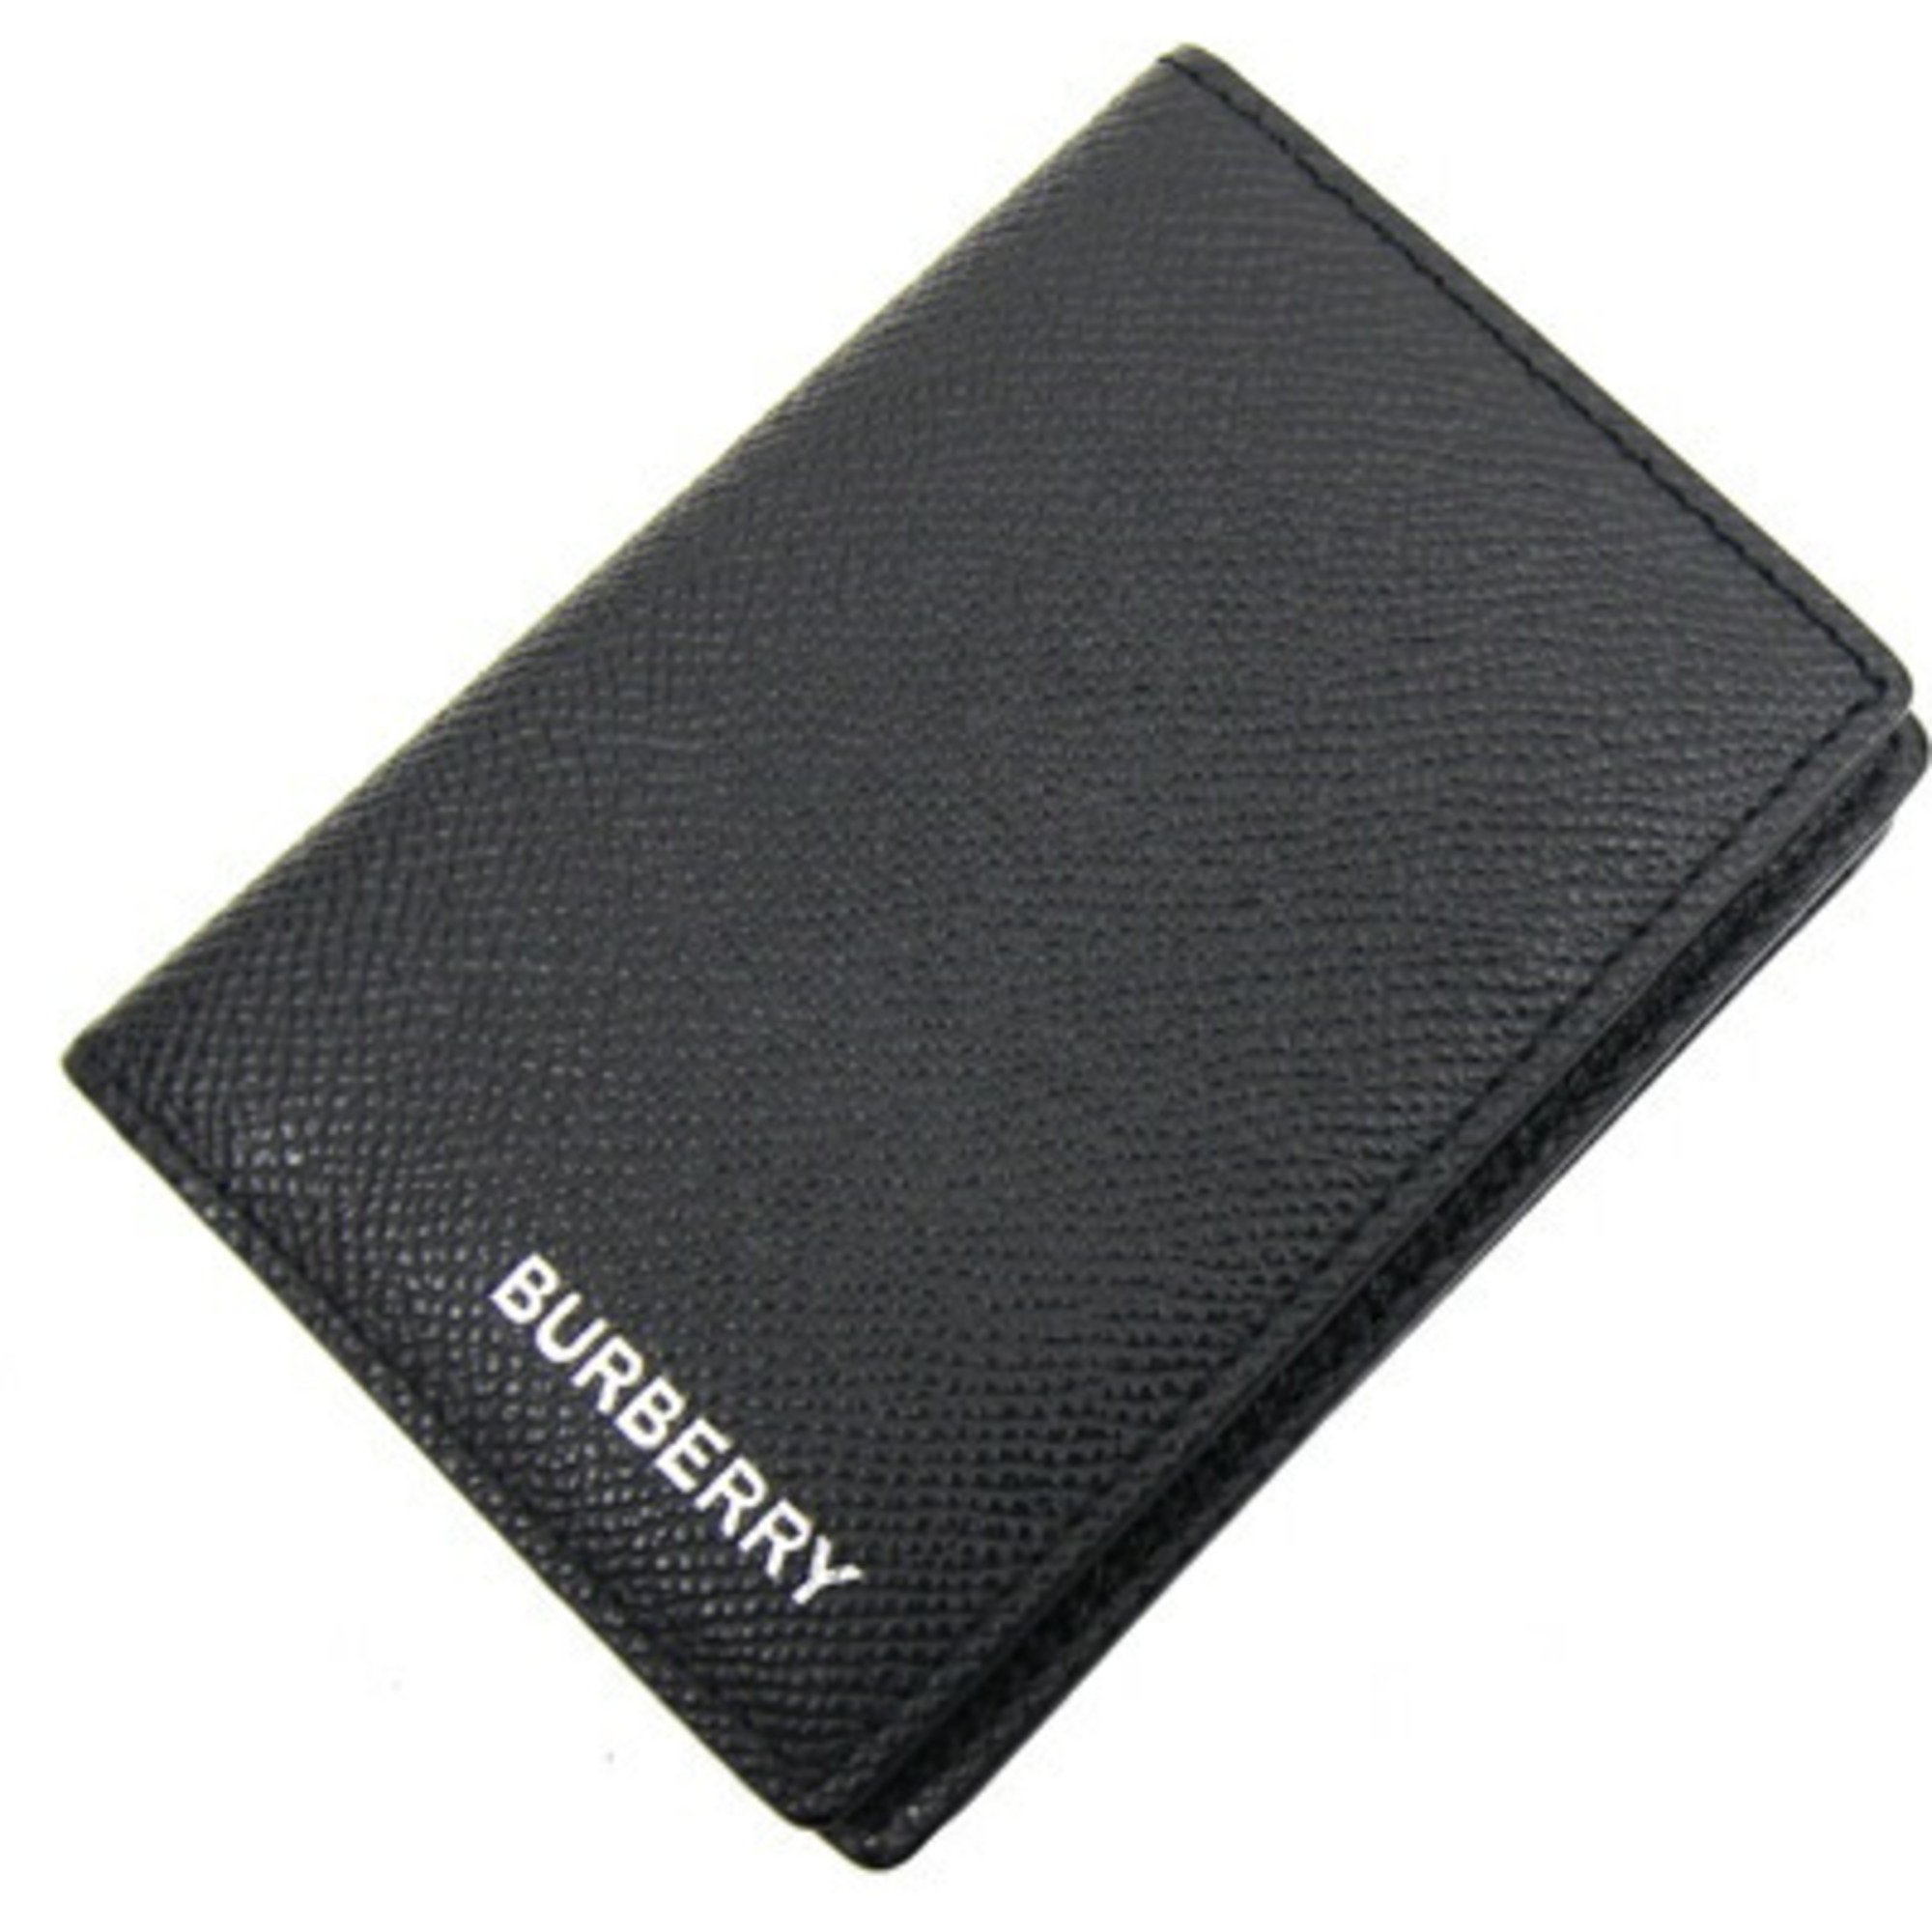 Burberry Business Card Holder Black Leather Case Men's BURBERRY